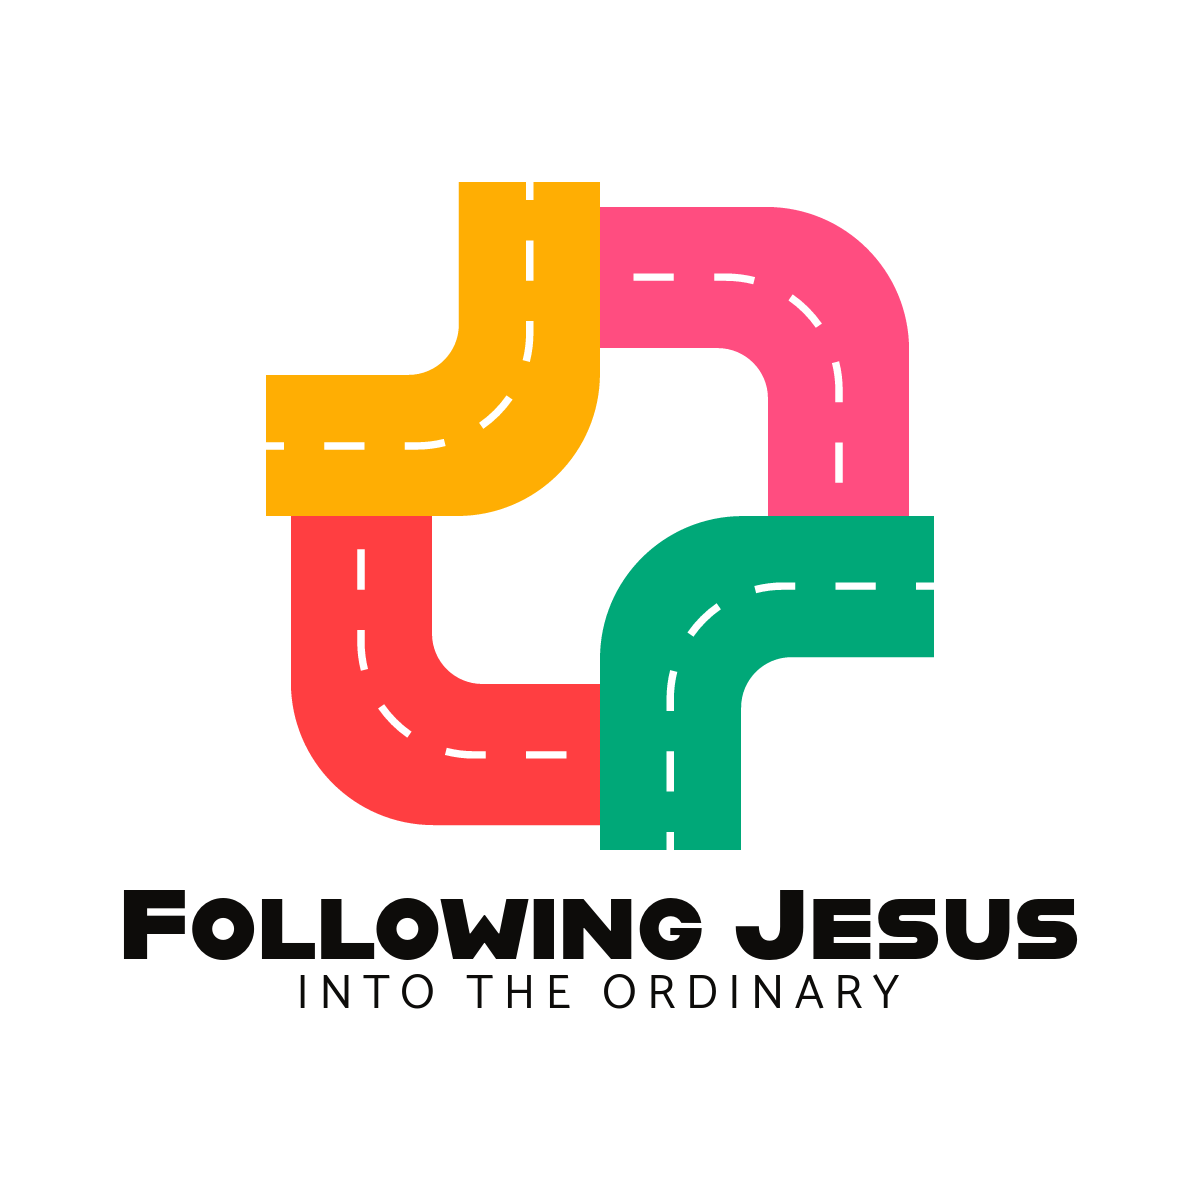 Following Jesus into the Ordinary